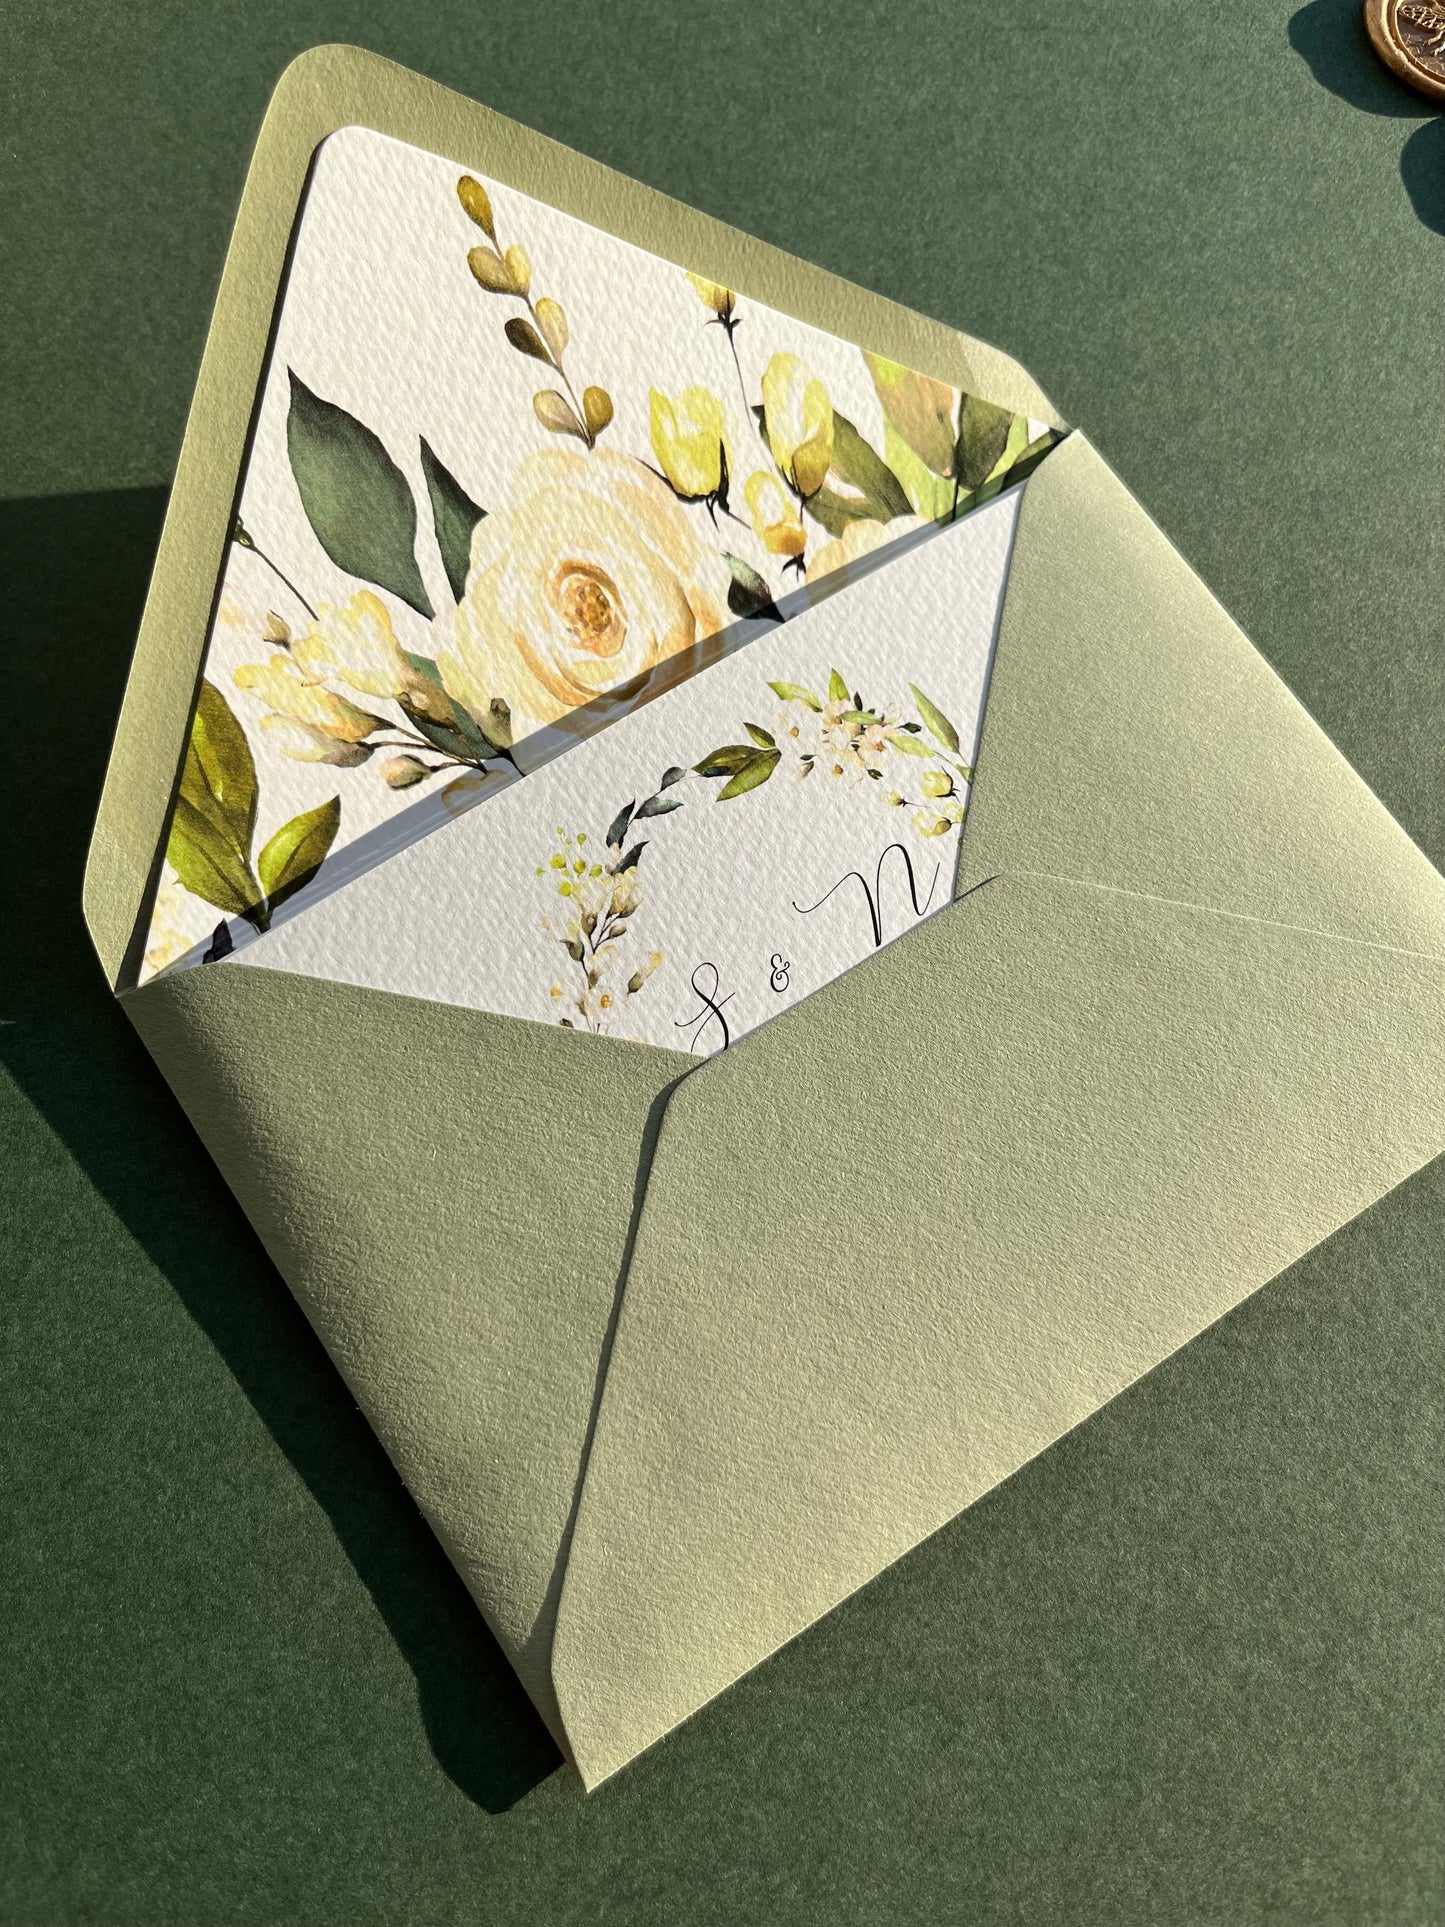 Green and white concertina wedding invitation set